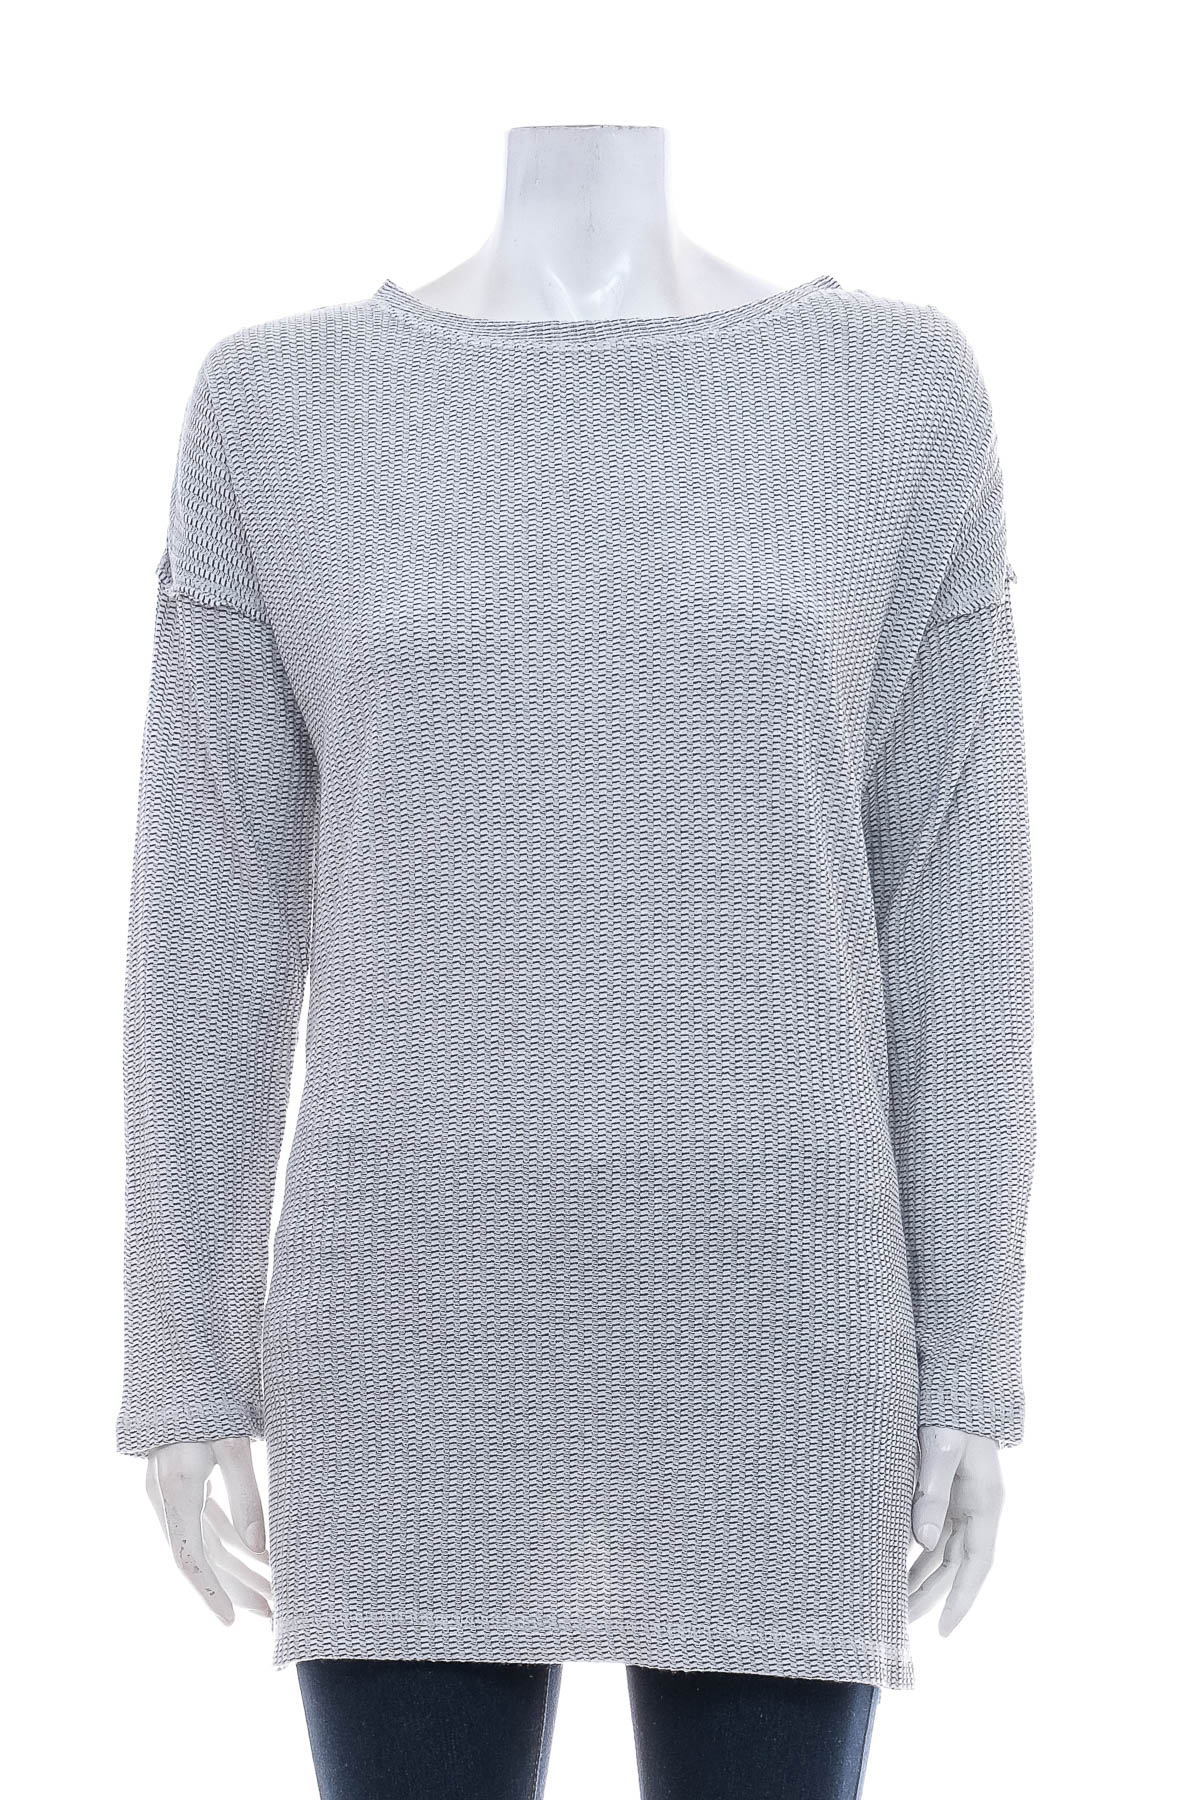 Women's sweater - Zara Trafaluc - 0